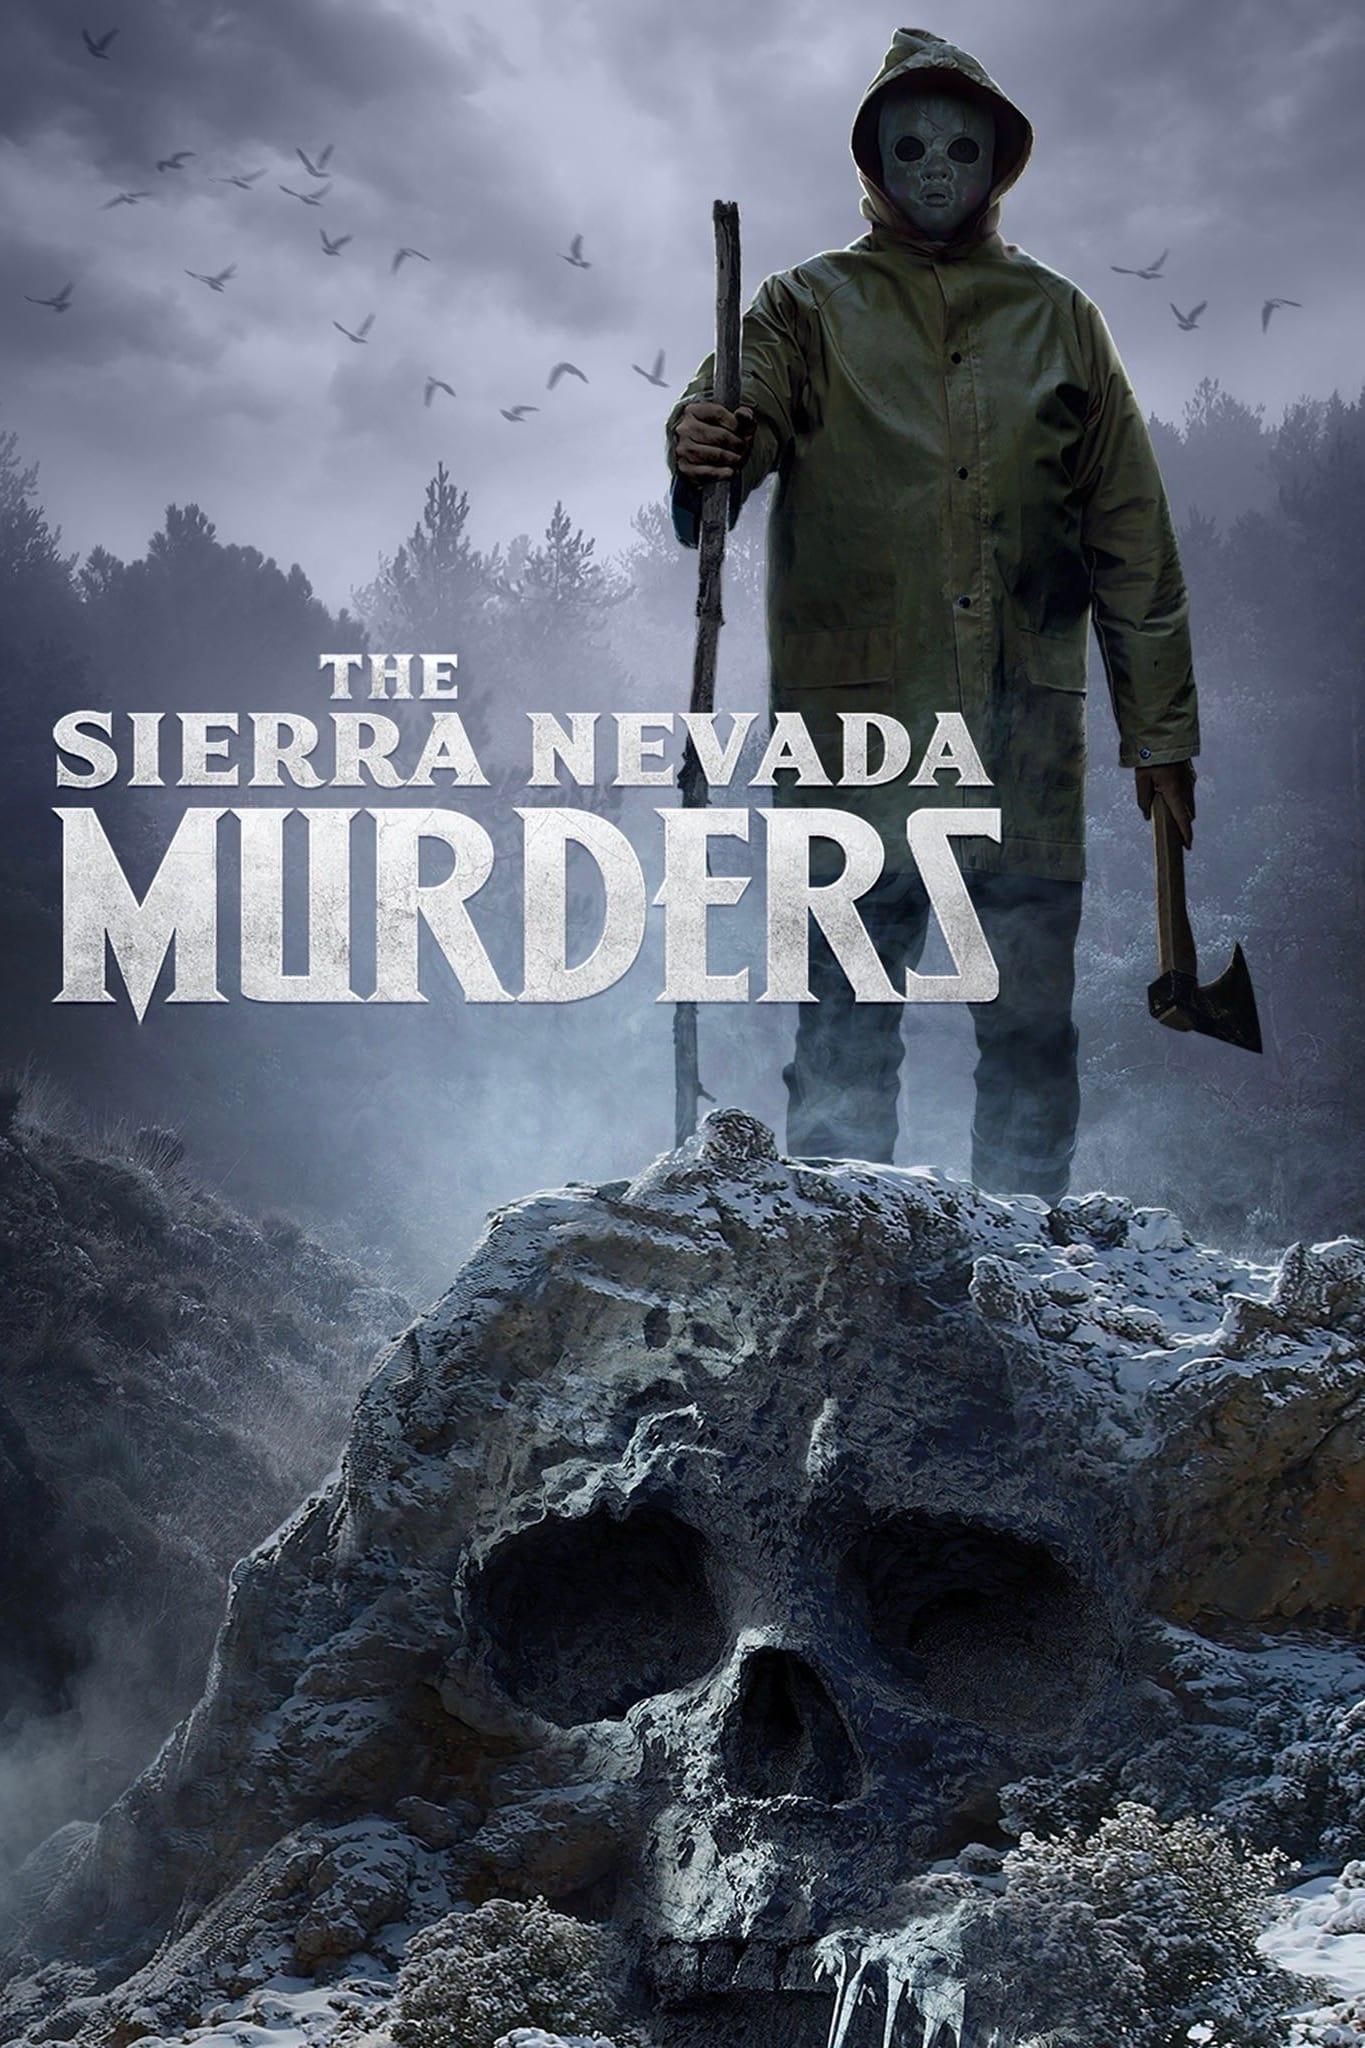 The Sierra Nevada Murders poster